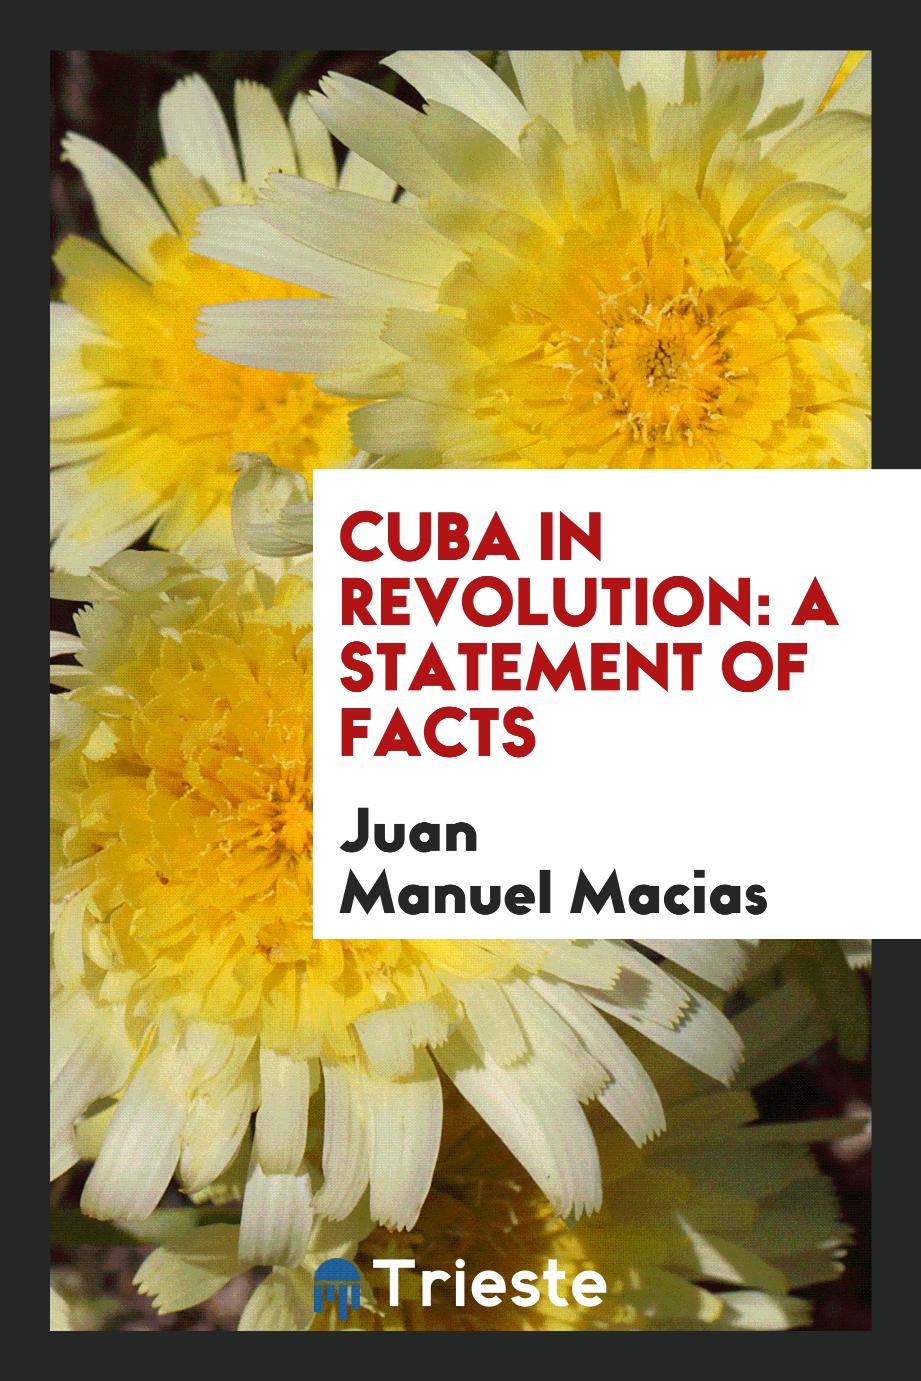 Juan Manuel Macias - Cuba in Revolution: A Statement of Facts